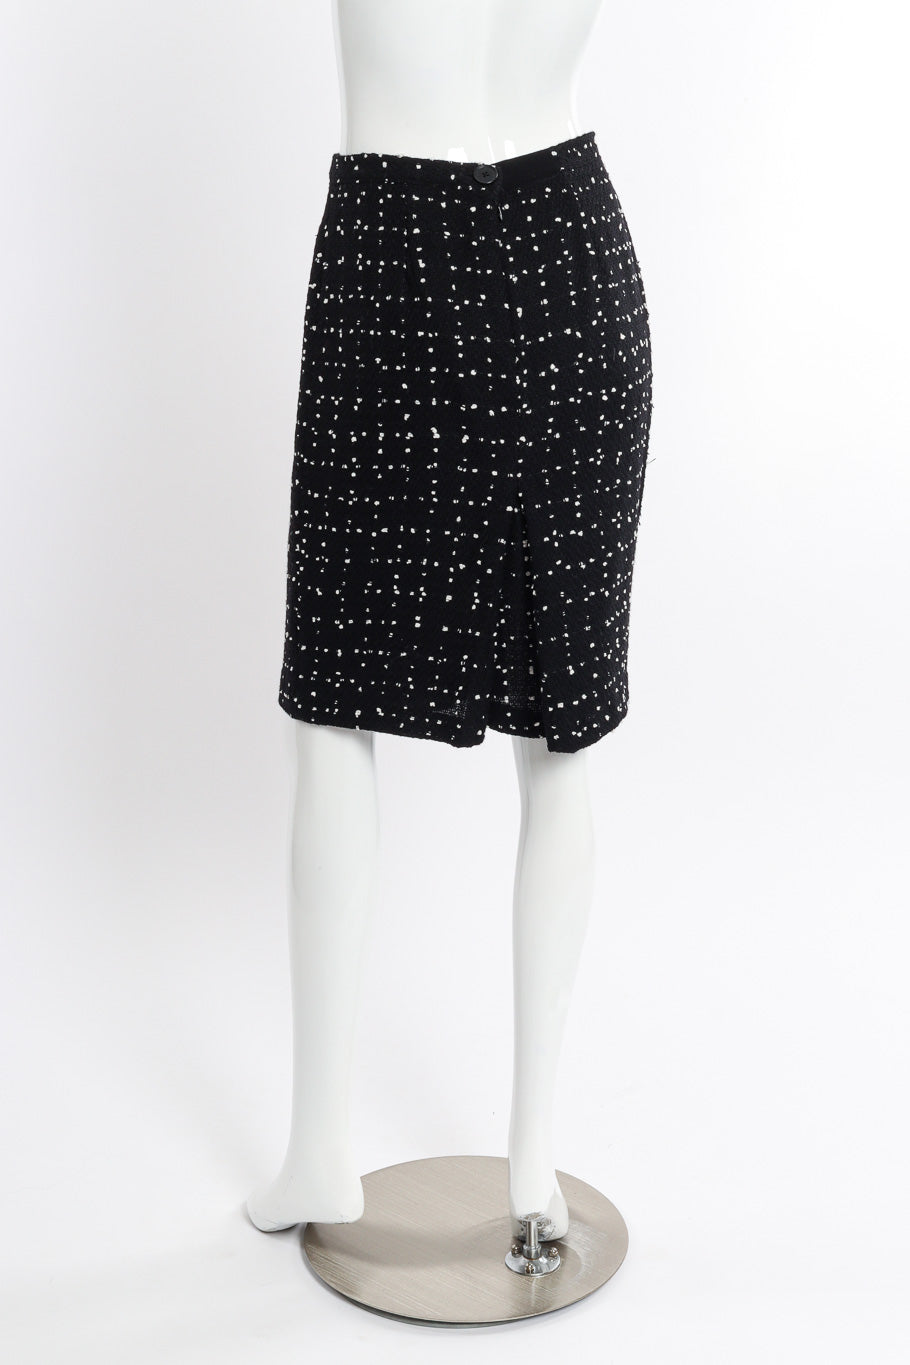 Vintage Moschino Dot Bouclé Jacket and Skirt Set skirt back view on mannequin @recessla